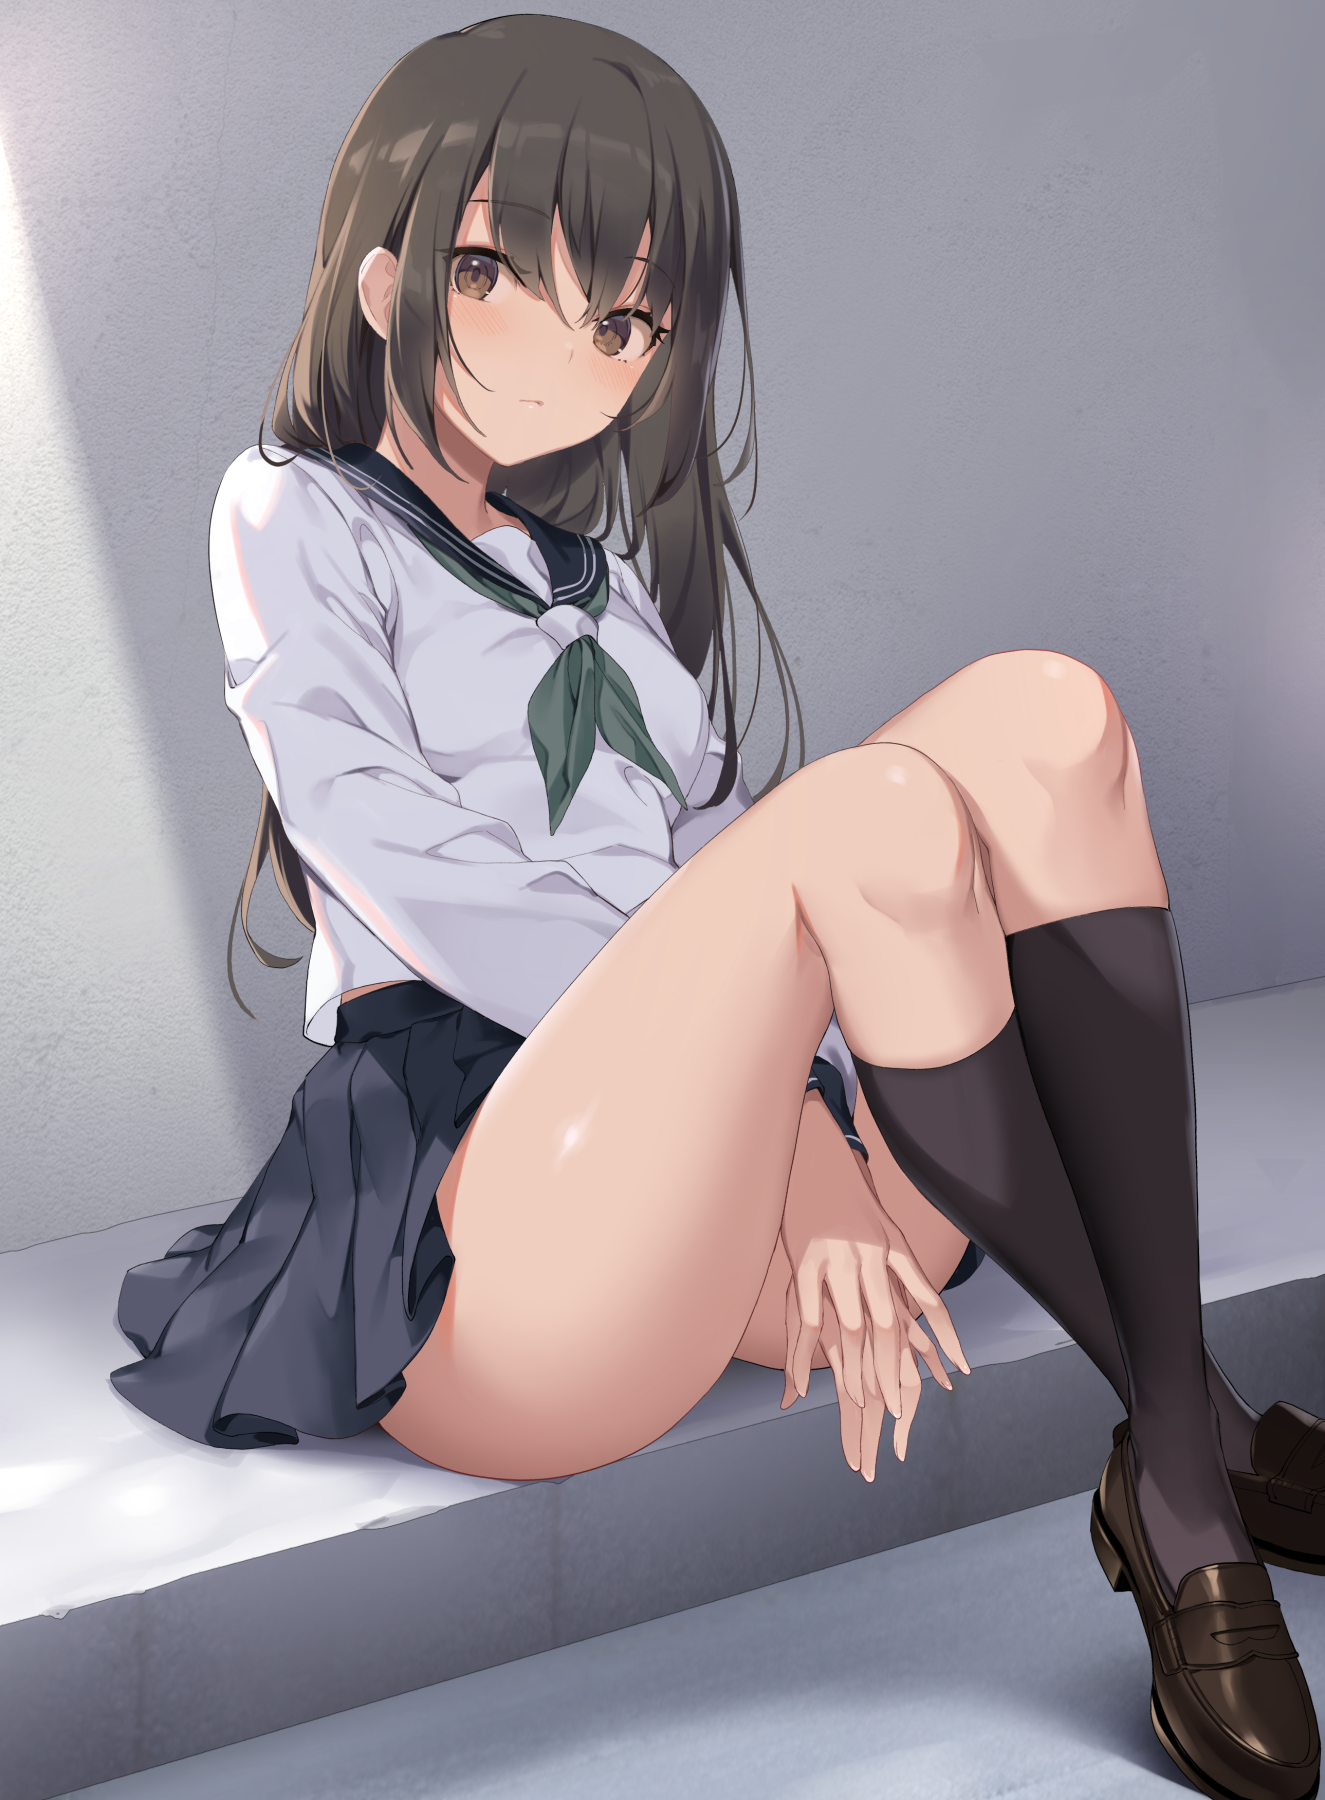 Anime 1325x1800 anime girls anime school uniform brunette brown eyes sitting thighs Icomochi hand(s) between legs artwork